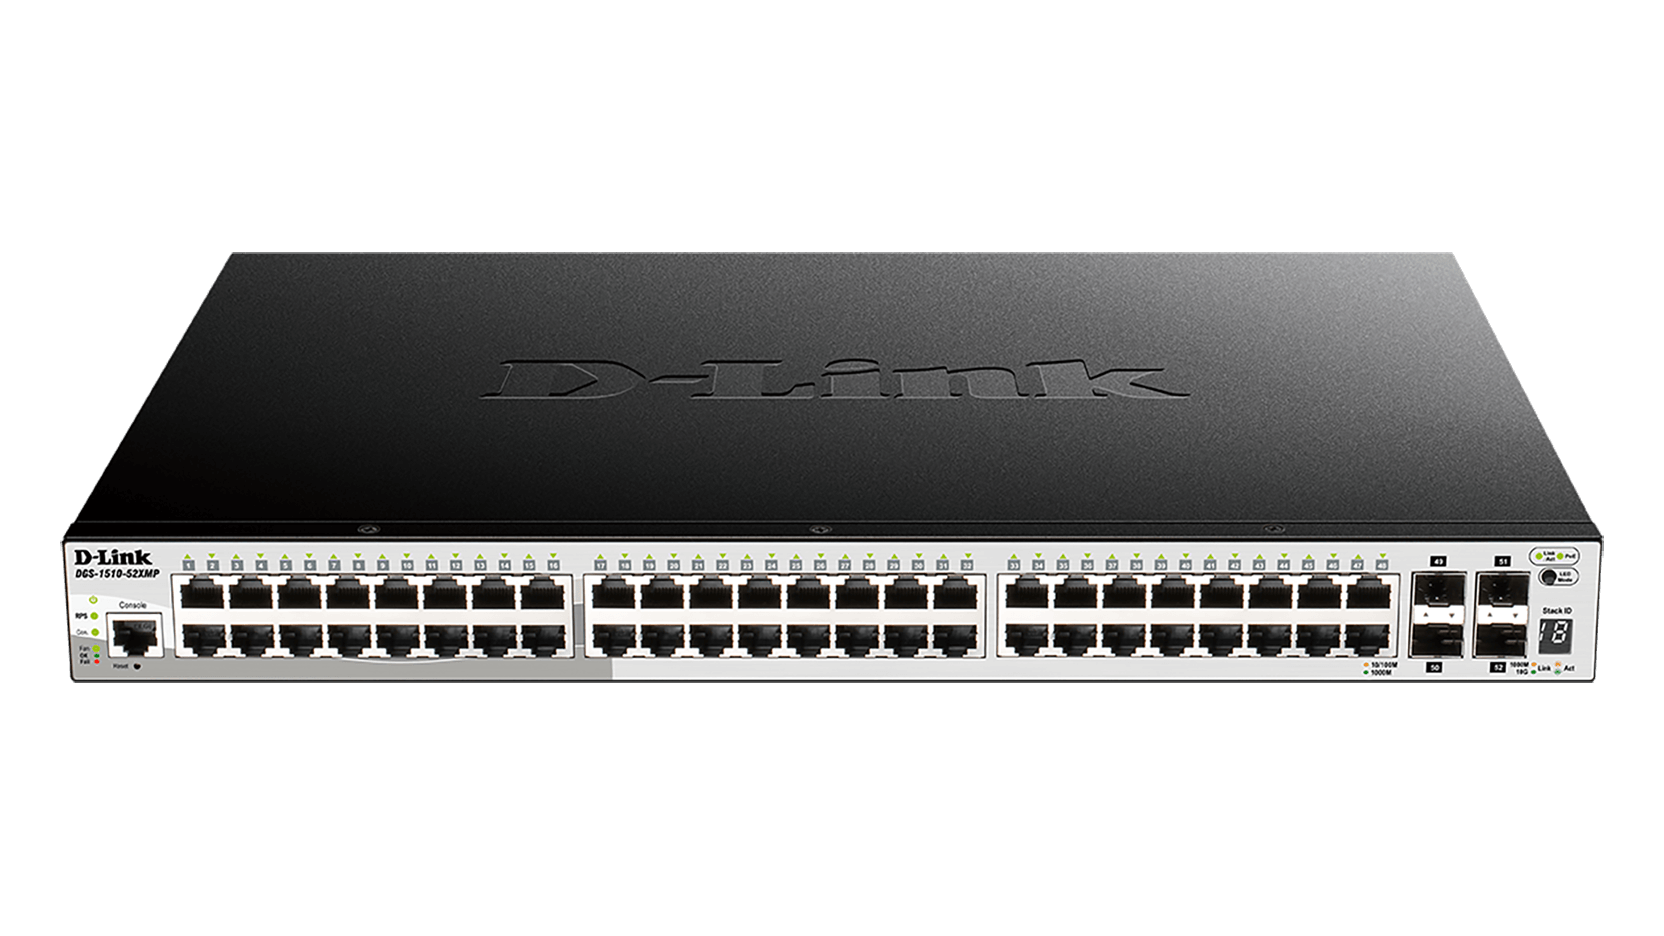 D-Link DGS-1510-28 Smart Managed Gigabit Stack Switch 28 Ports, davon 24 x 10/100/1000 Mbit/s, 2 x SFP, 2 x 10G SFP+ 